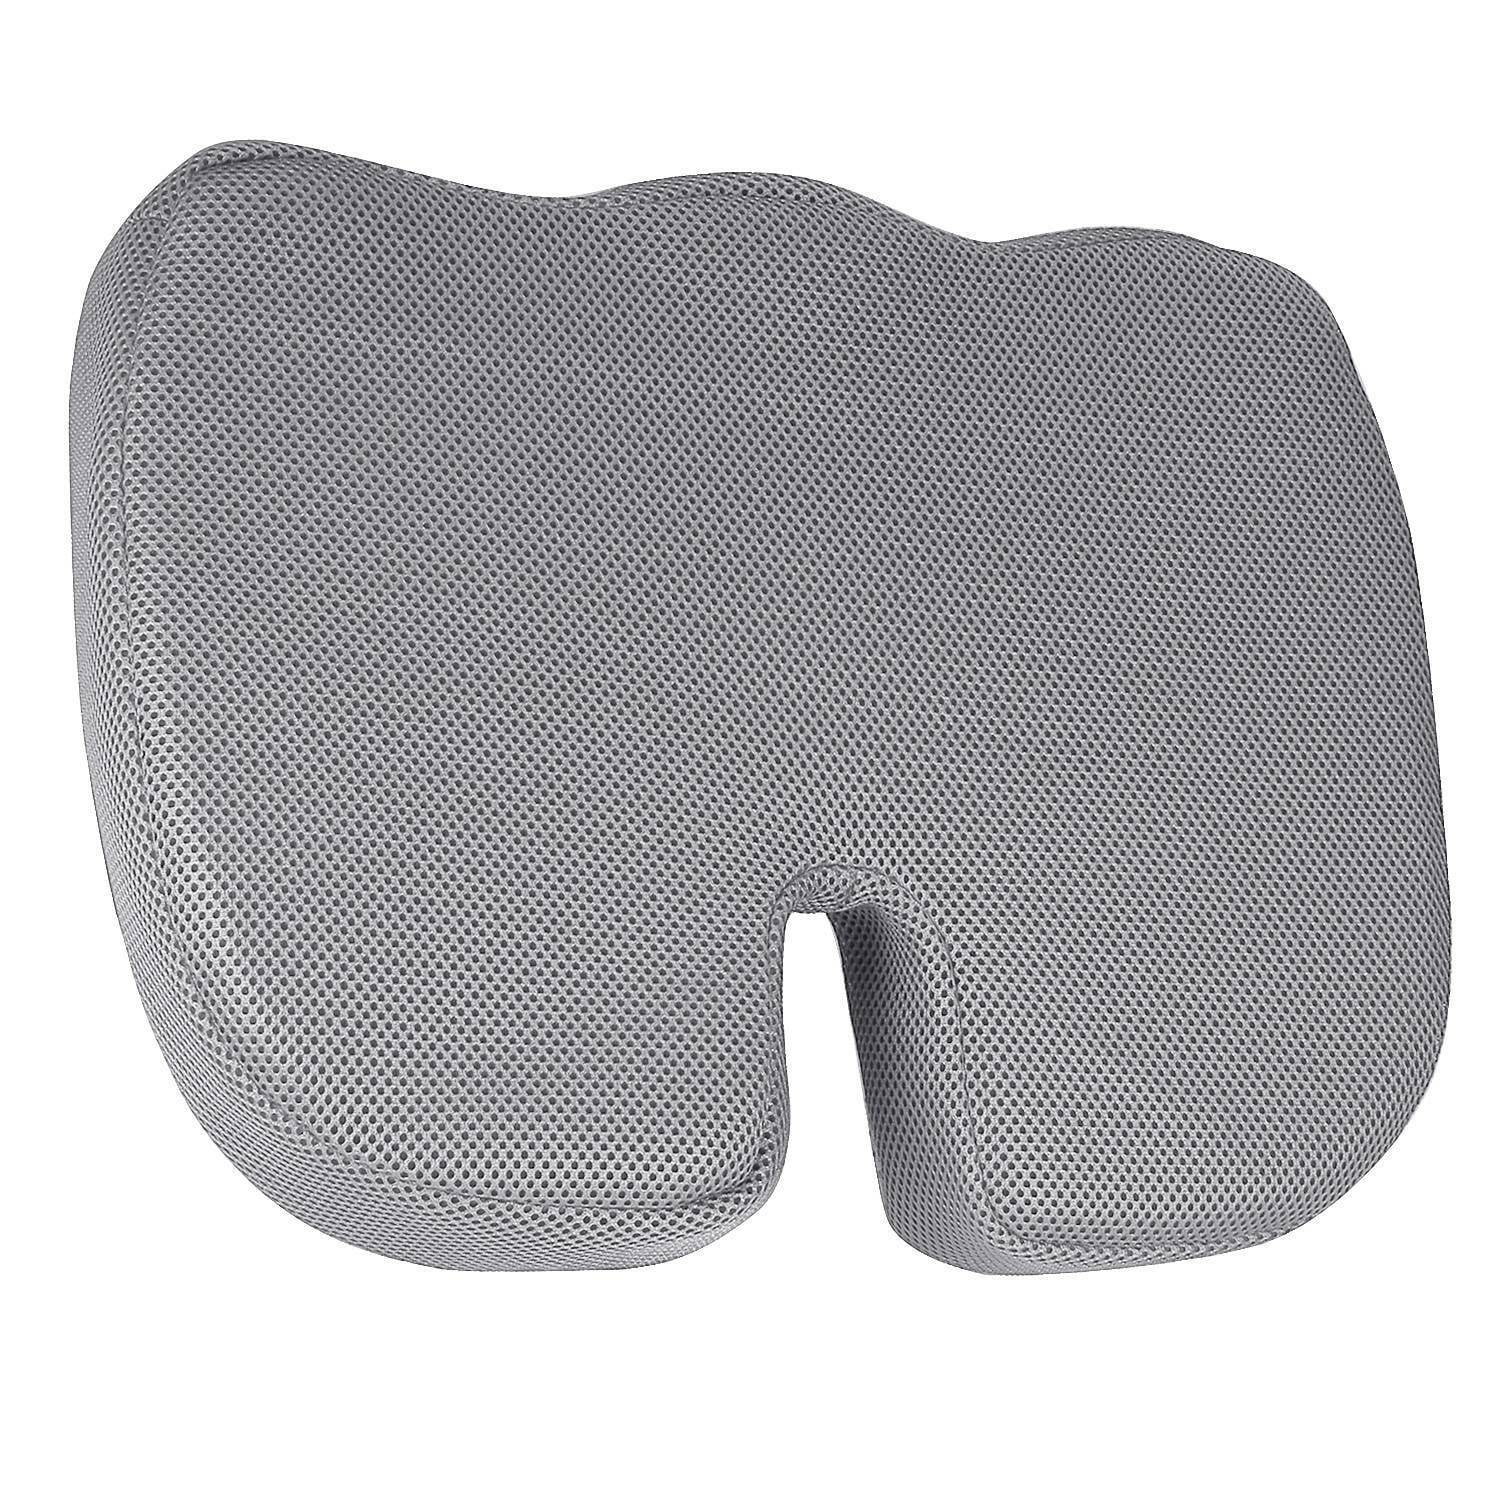  OKCELL Butt Cushion for Tailbone Pain, Cushion for